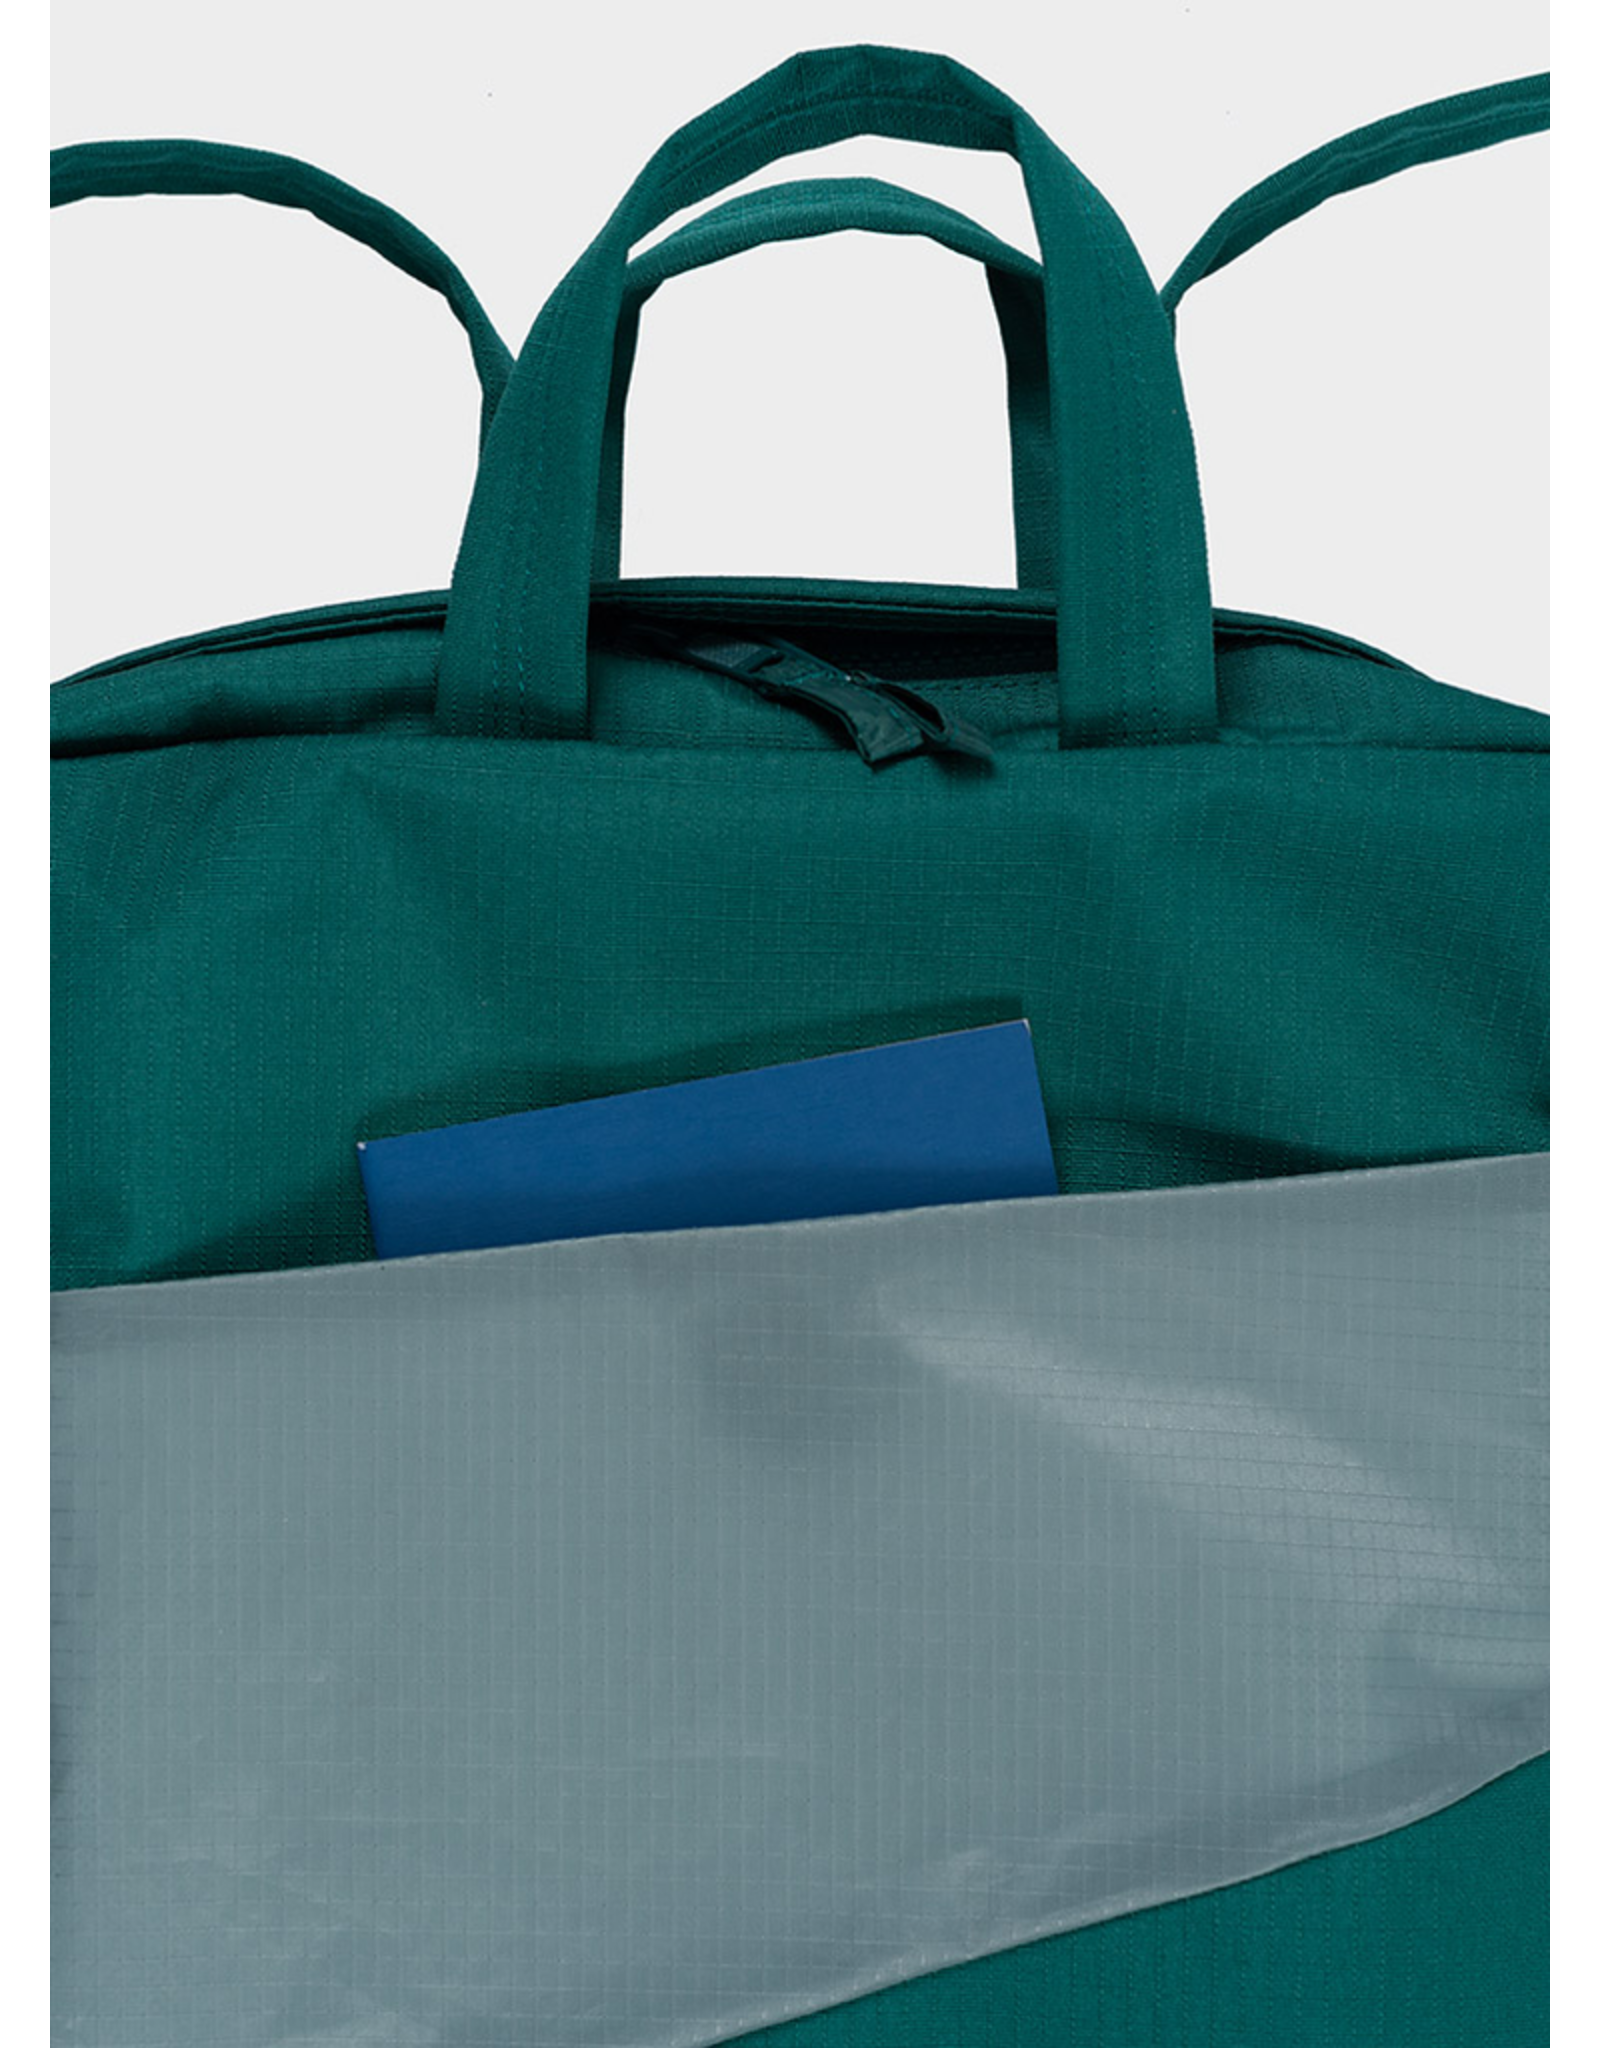 Susan Bijl Backpack, Pine & Grey - One size